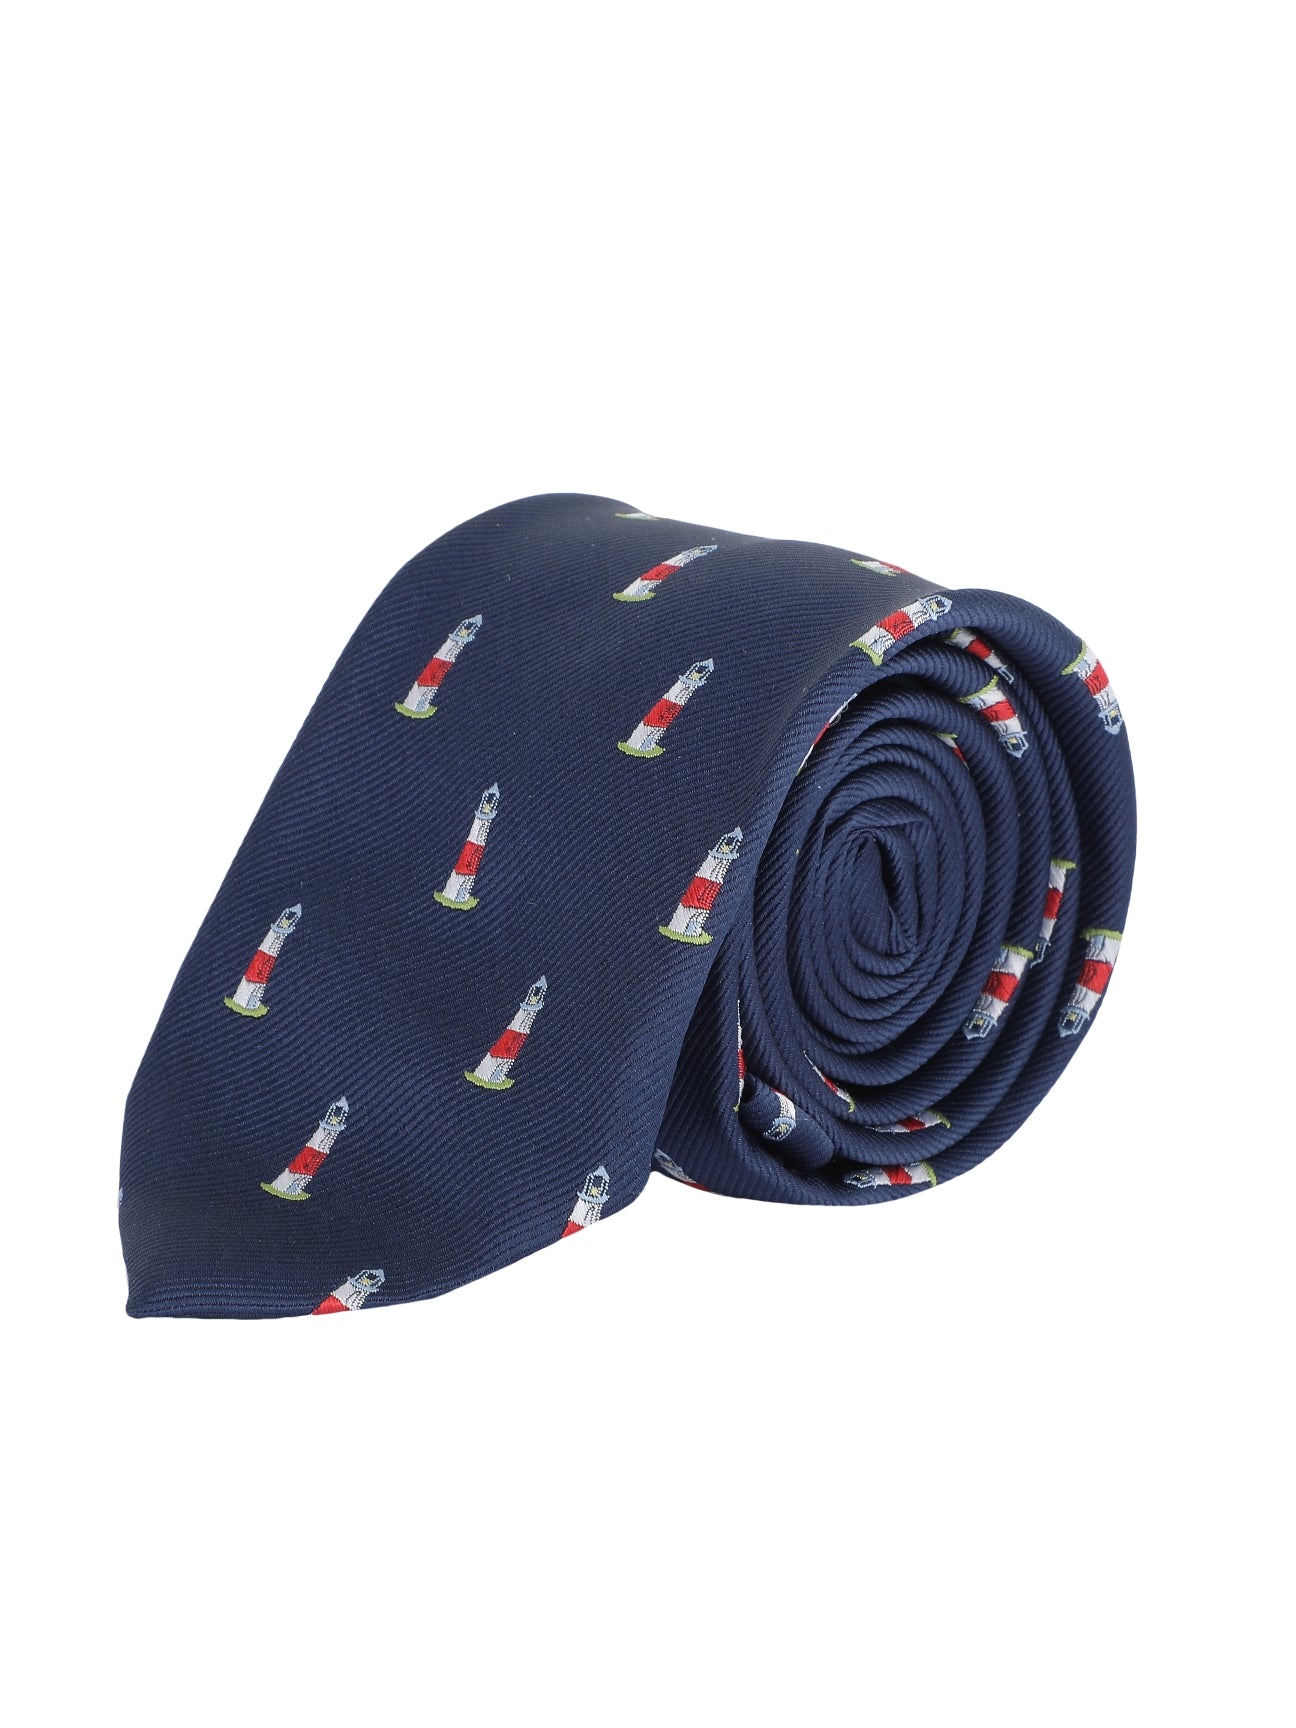 Alvaro Castagnino Microfiber Blue Colored Necktie for Men